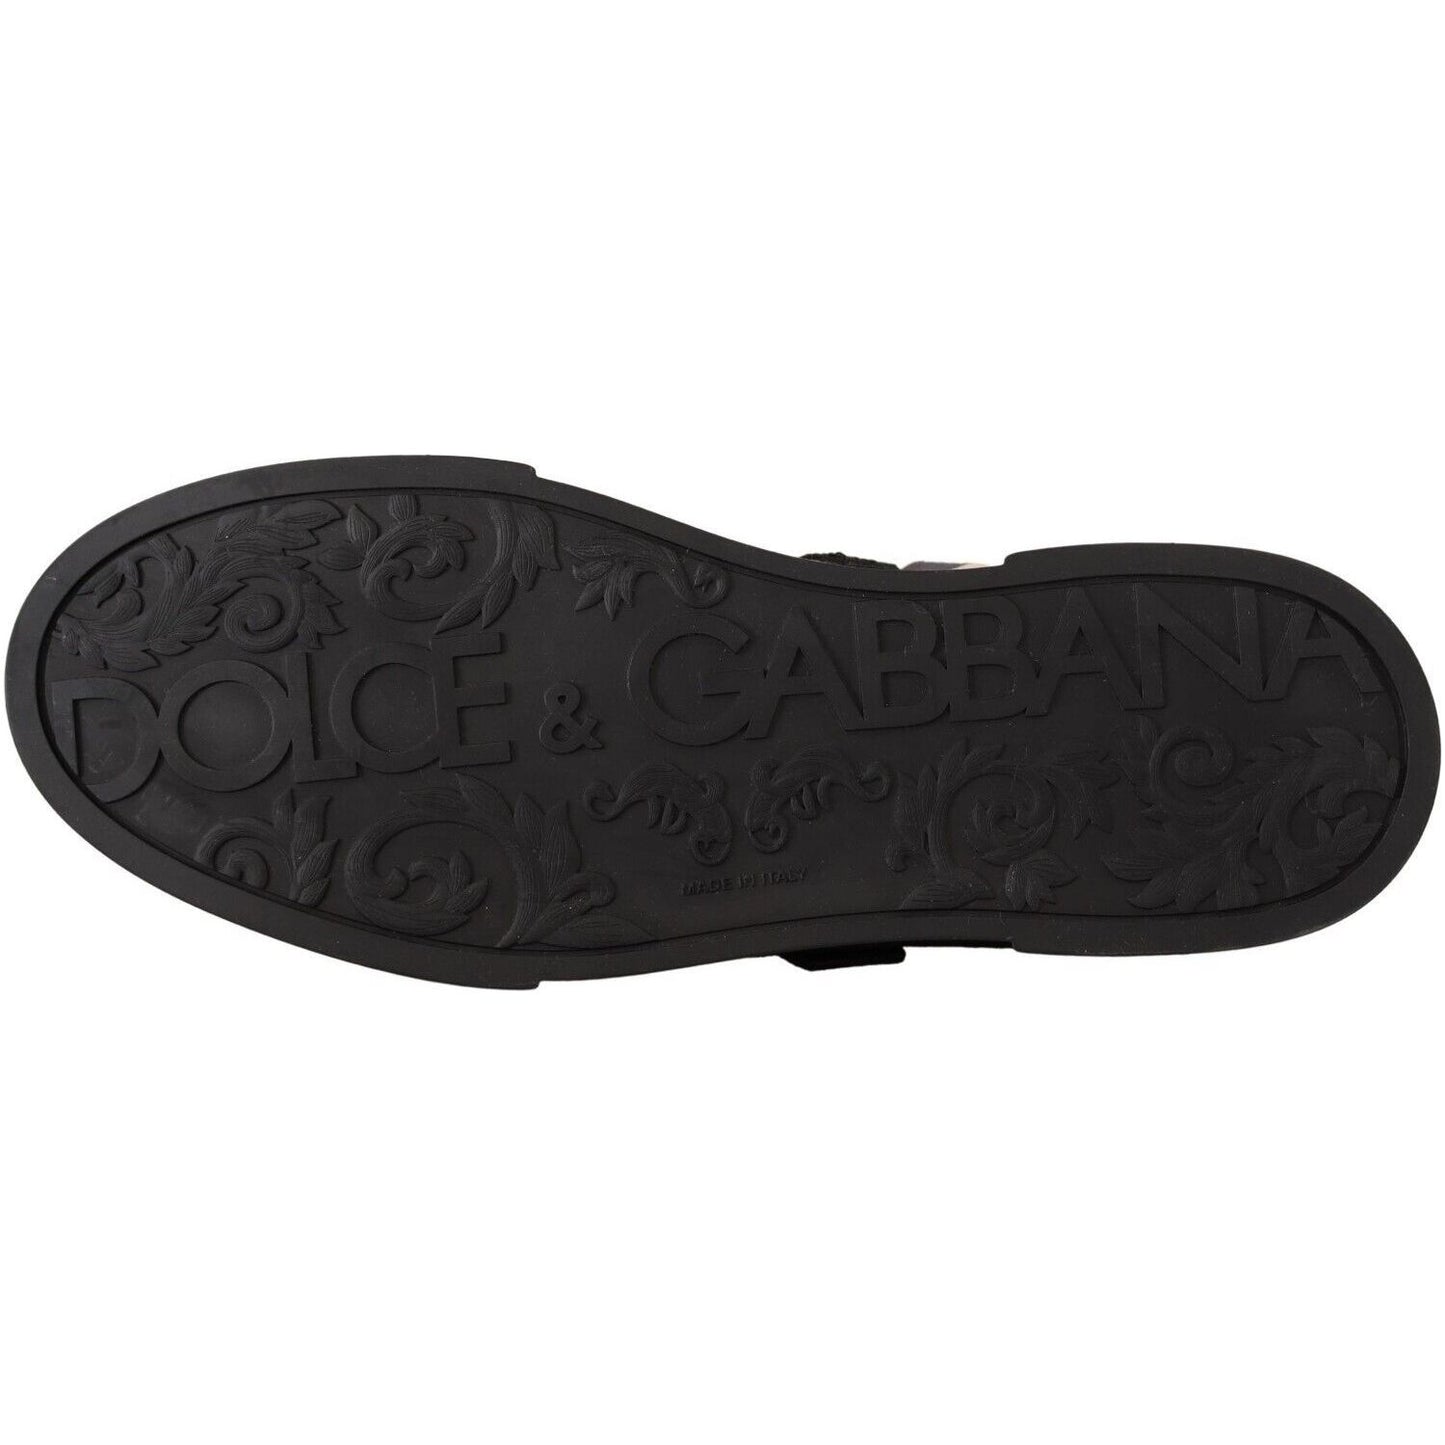 Dolce & Gabbana Zebra Suede Low Top Fashion Sneakers black-white-zebra-suede-rubber-sneakers-shoes-2 MAN SNEAKERS s-l1600-3-66-110d06dc-c0f.jpg